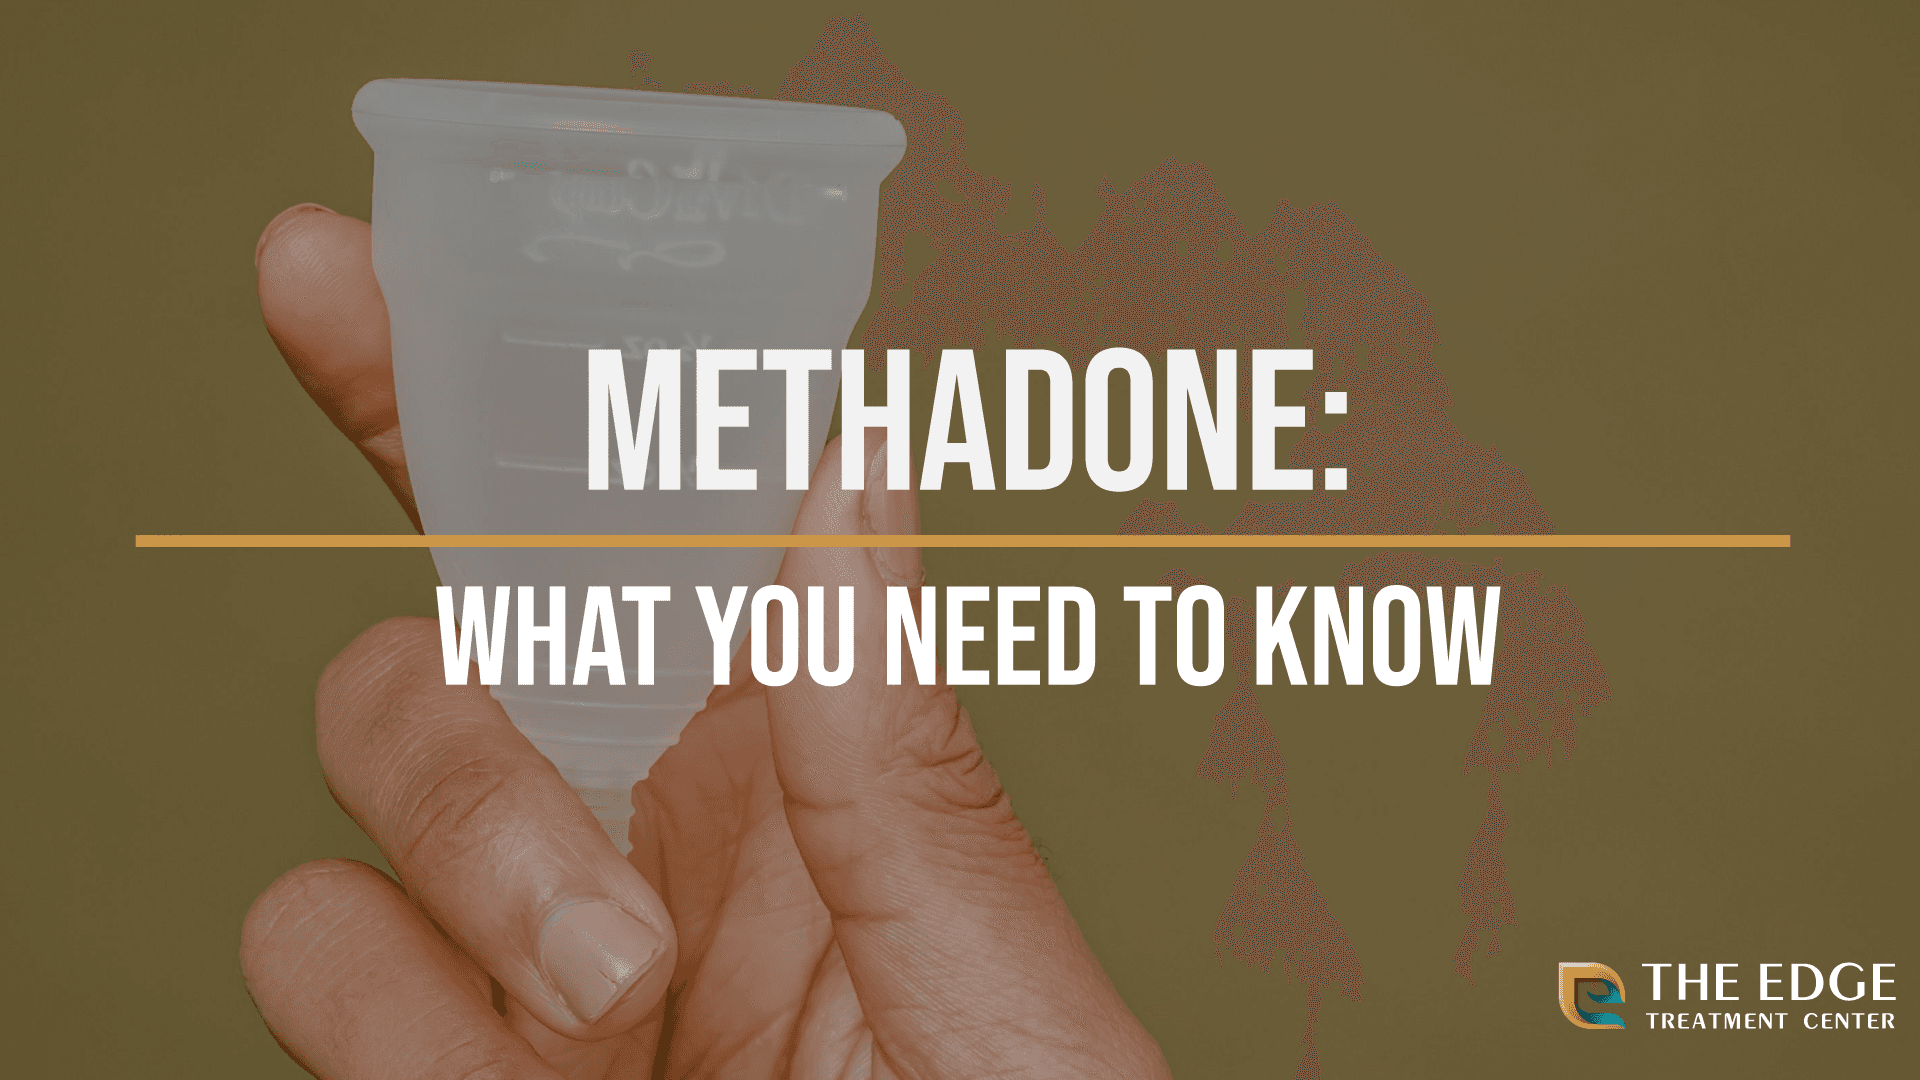 What is Methadone?